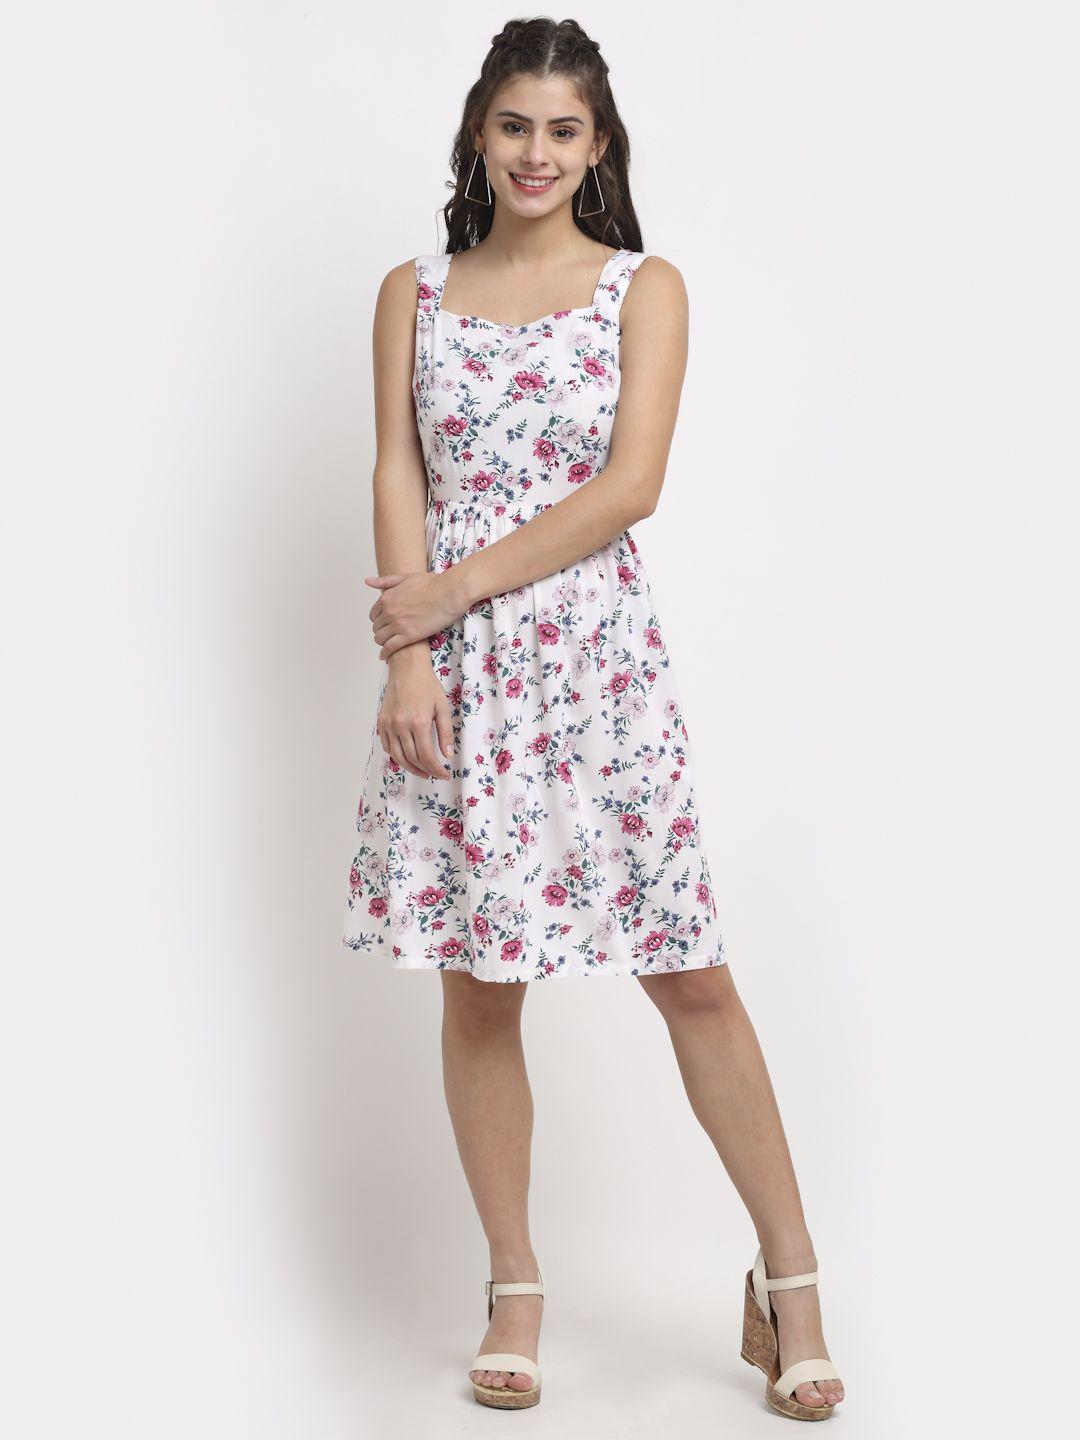 brinns-white-&-pink-floral-print-sleeveless-dress